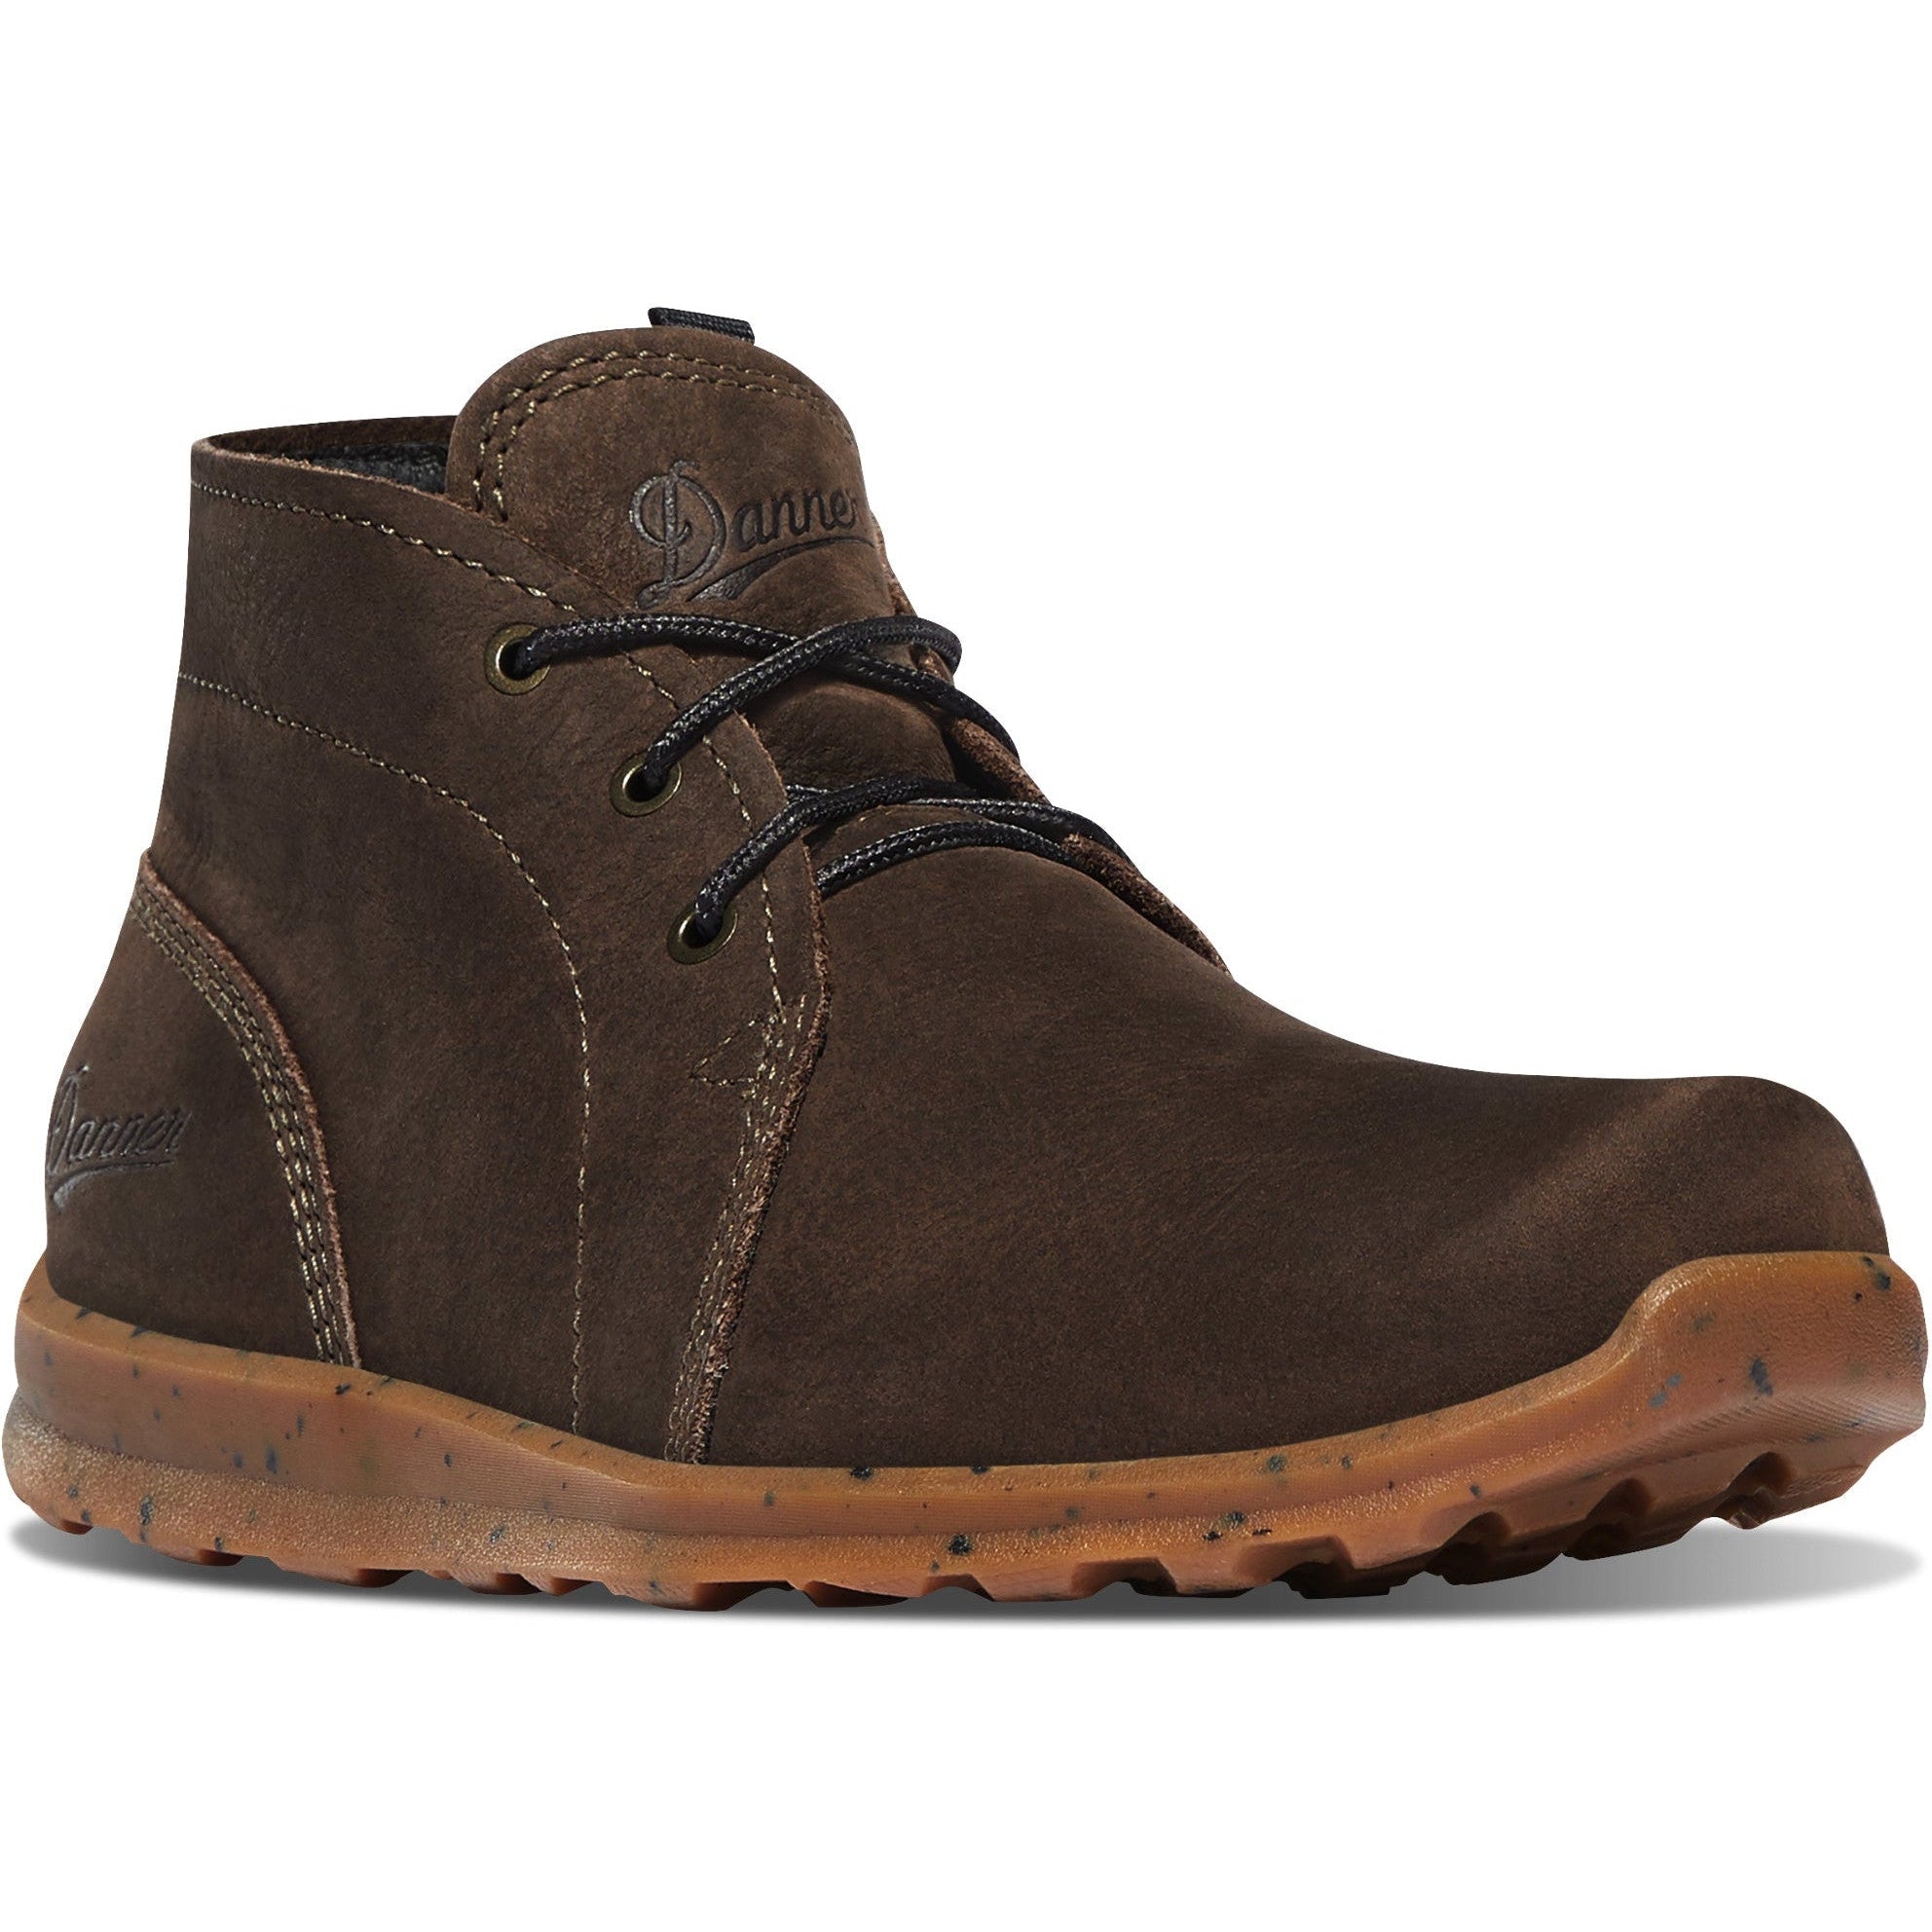 Danner Women's Forest Chukka 4.5" Hiking Boot - Bracken - 37643 5.5 / Medium / Brown - Overlook Boots